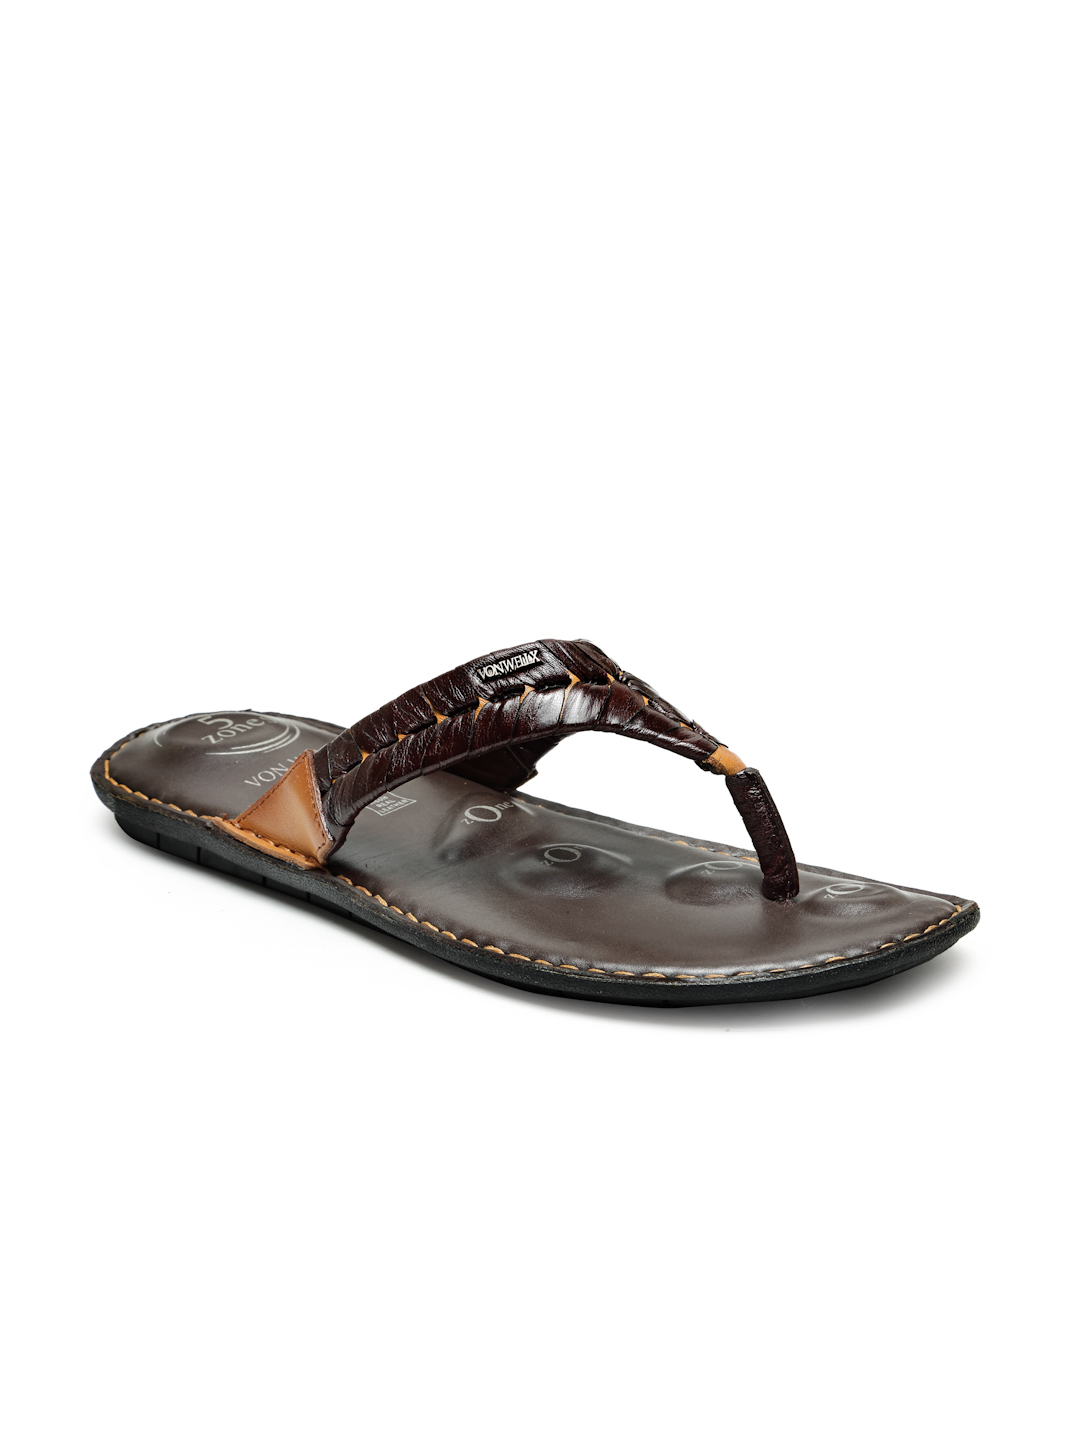 Buy Von Wellx Germany Comfort Men's Tan Slippers Alonso Online in Indore